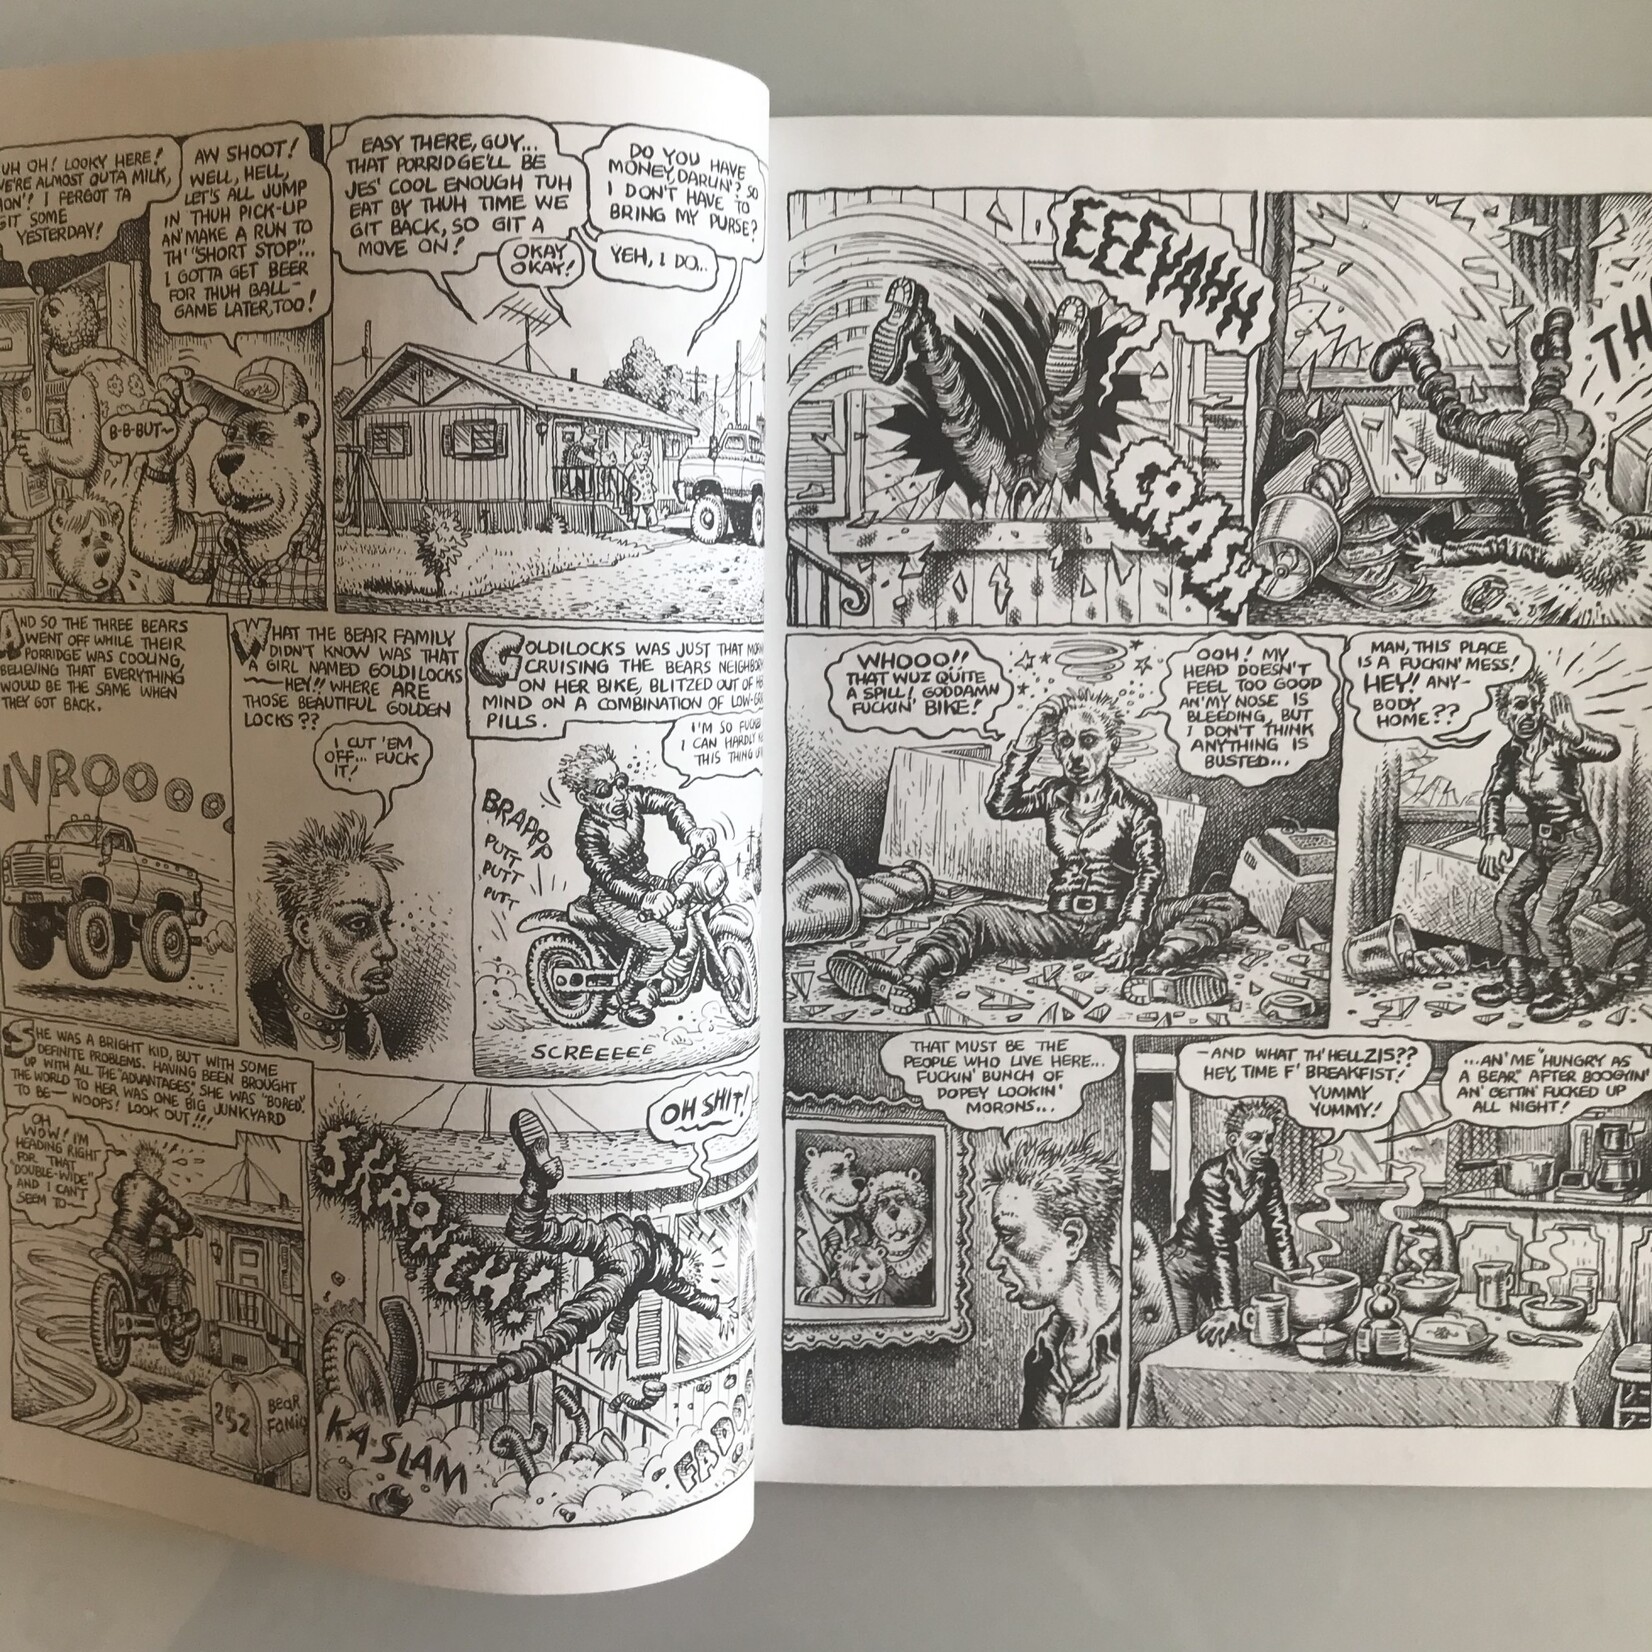 Weirdo - Vol. 1 #11 Fall 1984 (1993 Printing) - Comic Book